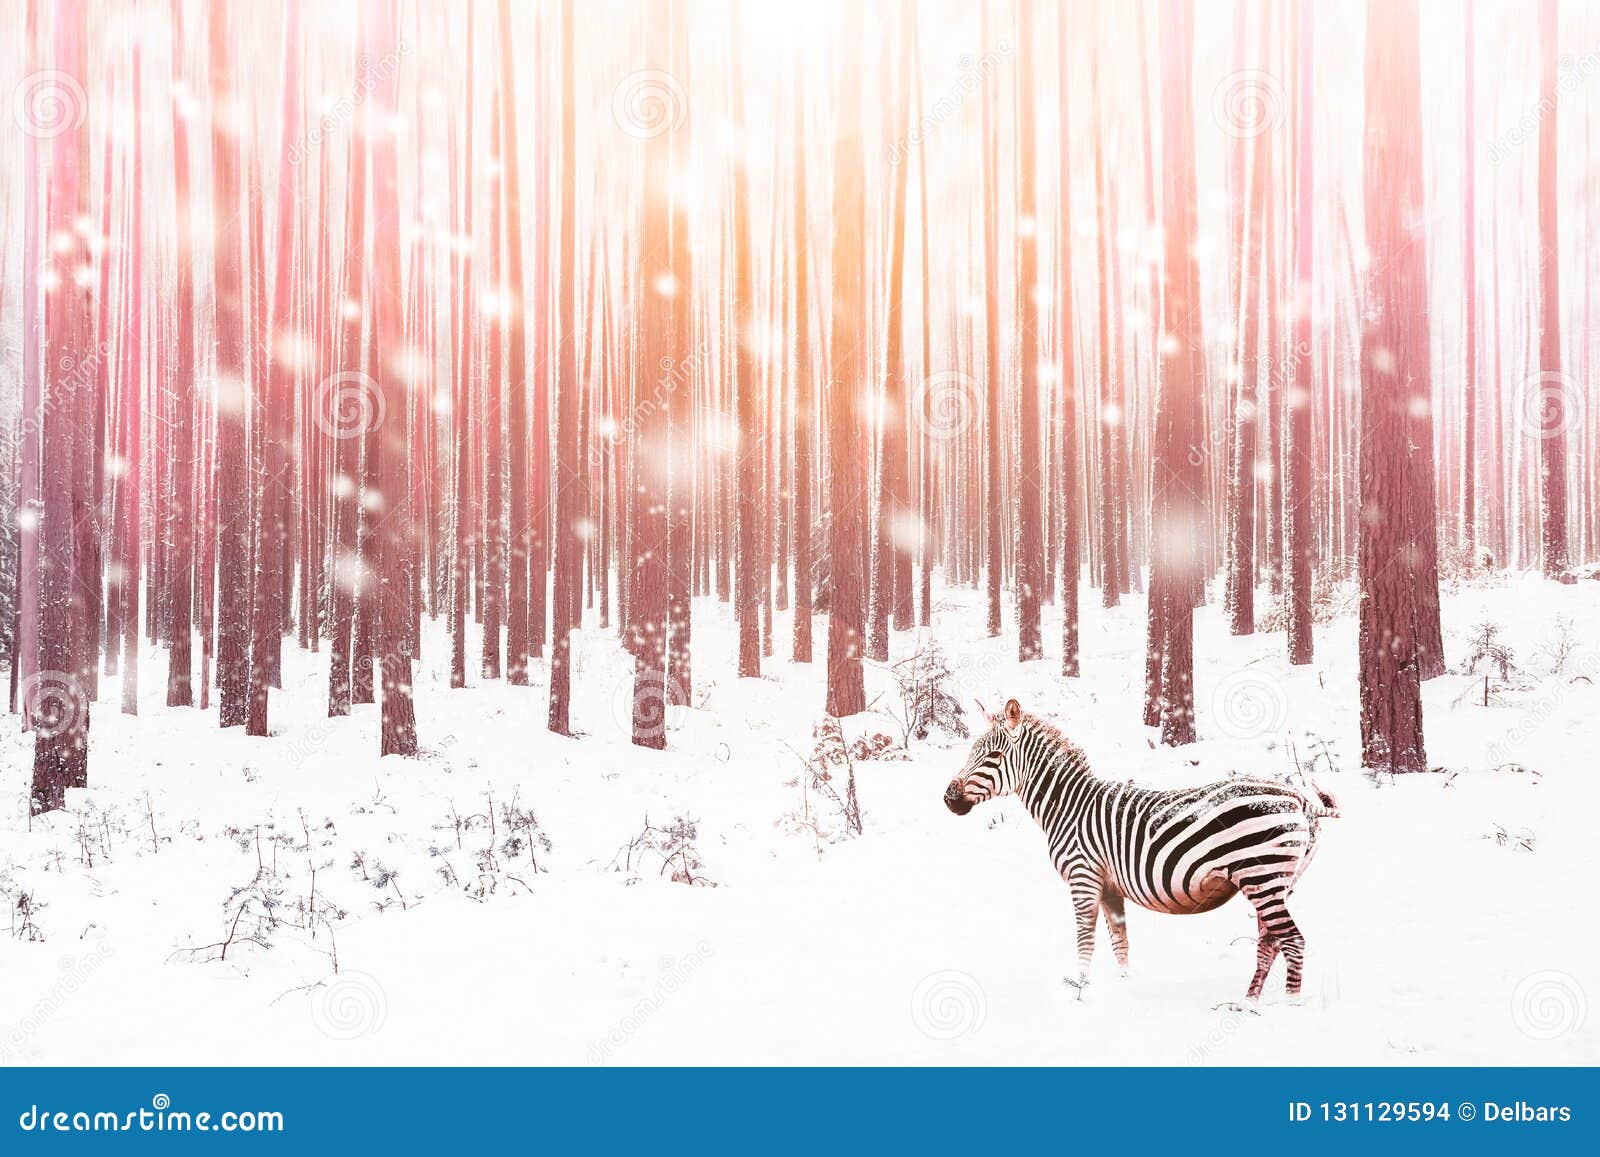 zebra in a snowy forest. fantastic fabulous image. winter dreamland. ÃÂÃÂ¡onceptual striped image in pink color